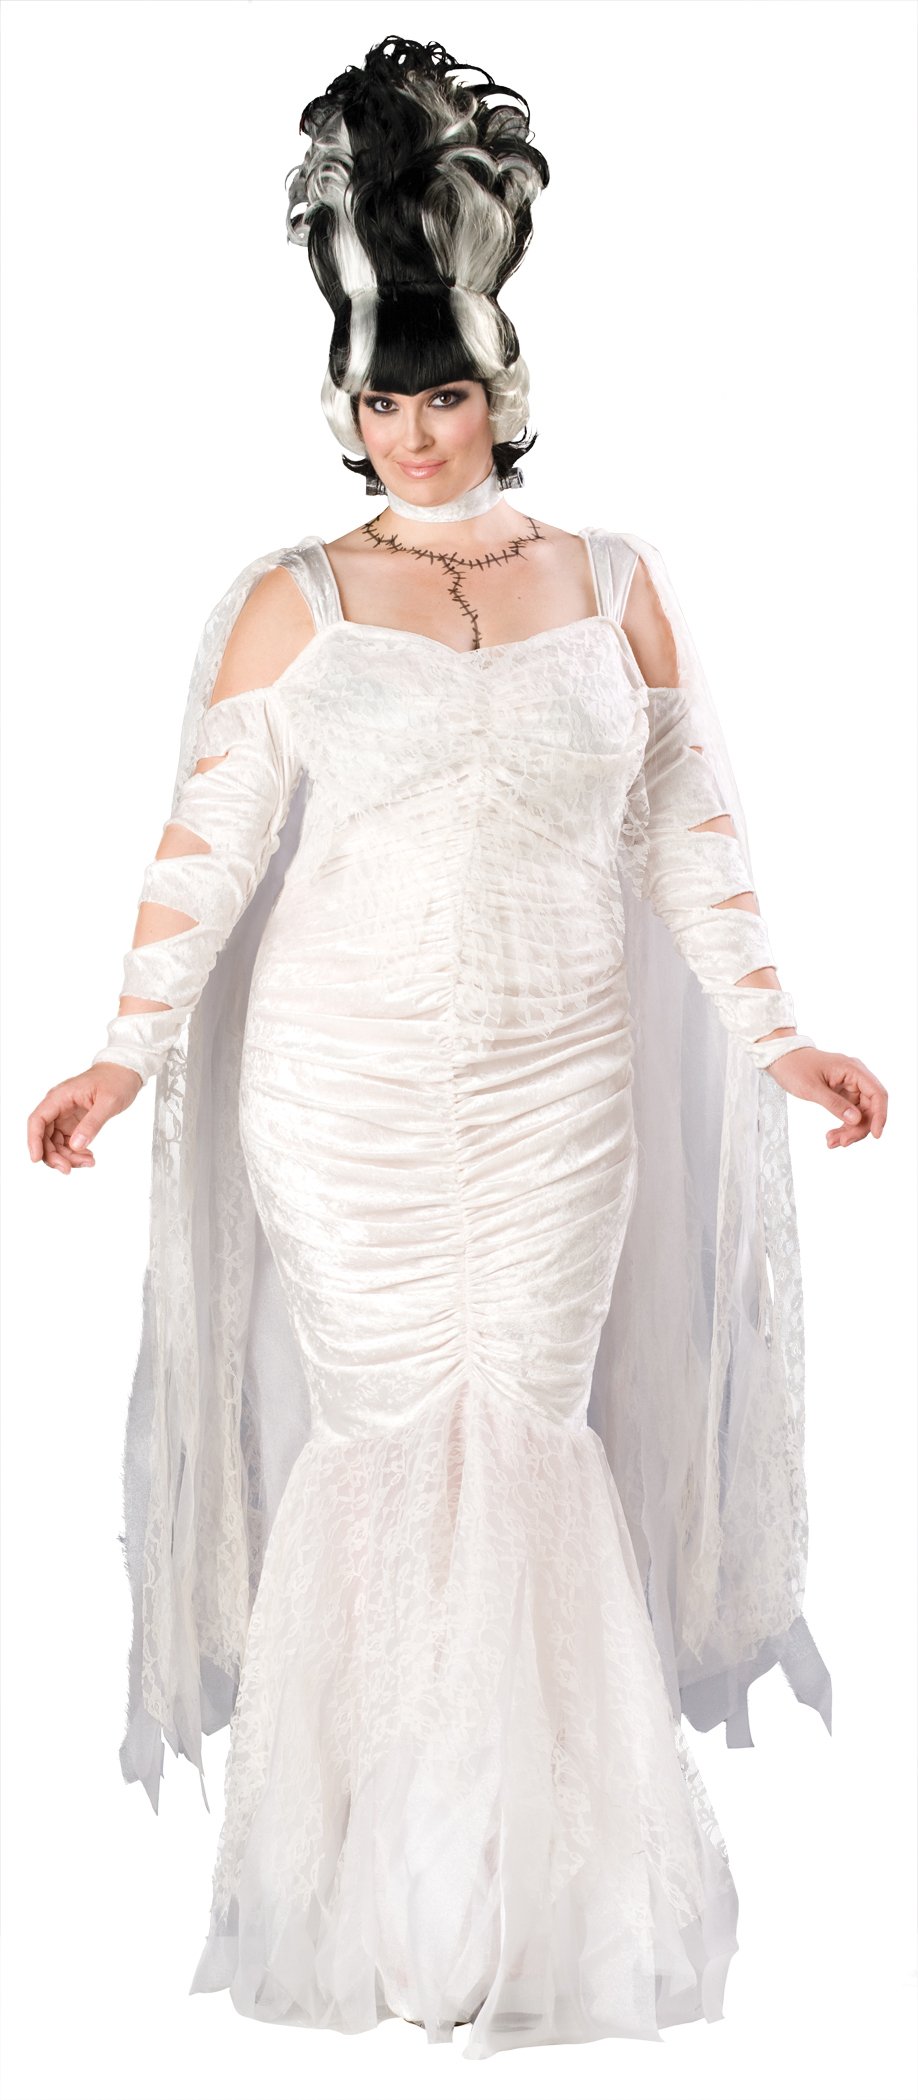 Bride Of Frankenstein Monster Elite Plus Adult Costume